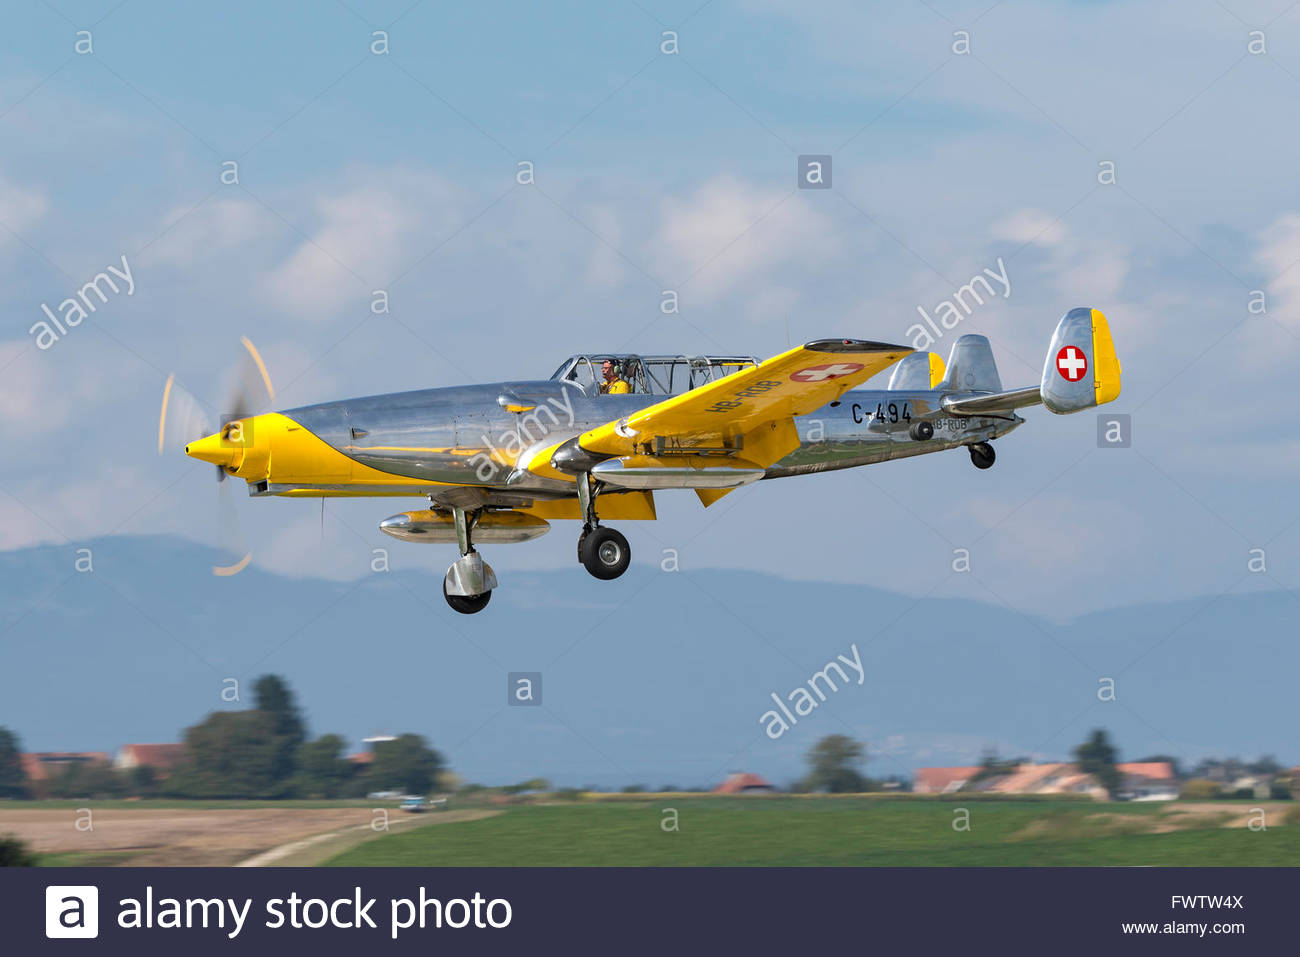 farner-werke-fw-c-3605-schlepp-swiss-target-towing-aircraft-hb-rdb-FWTW4X.jpg